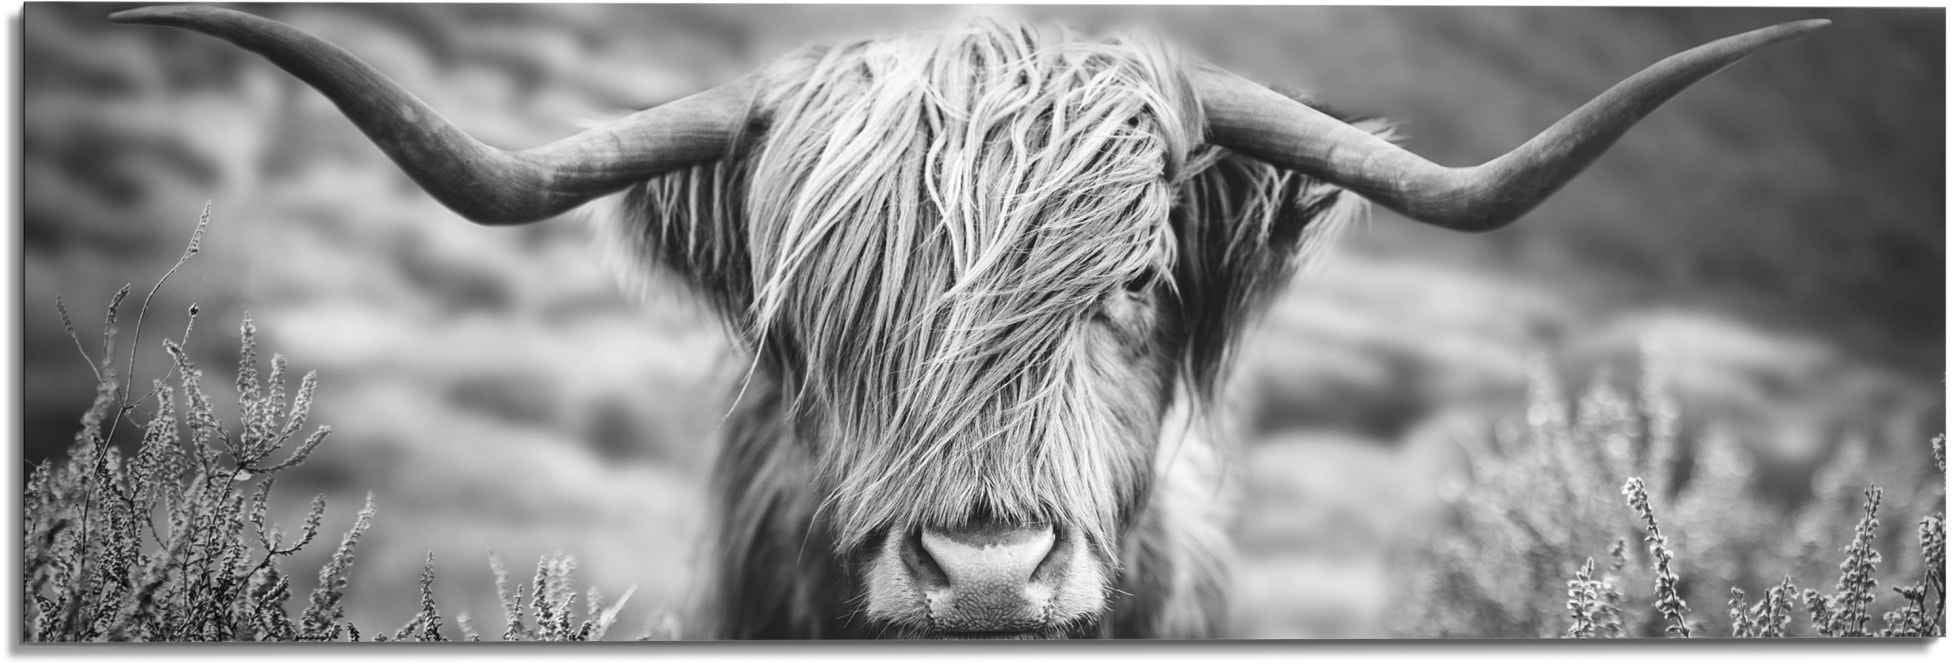 Reinders! Wandbild »Wandbild Highlander Bulle kaufen (1 Tiermotiv - Hochlandrind Bild«, Nahaufnahme - Kuh, günstig St.)